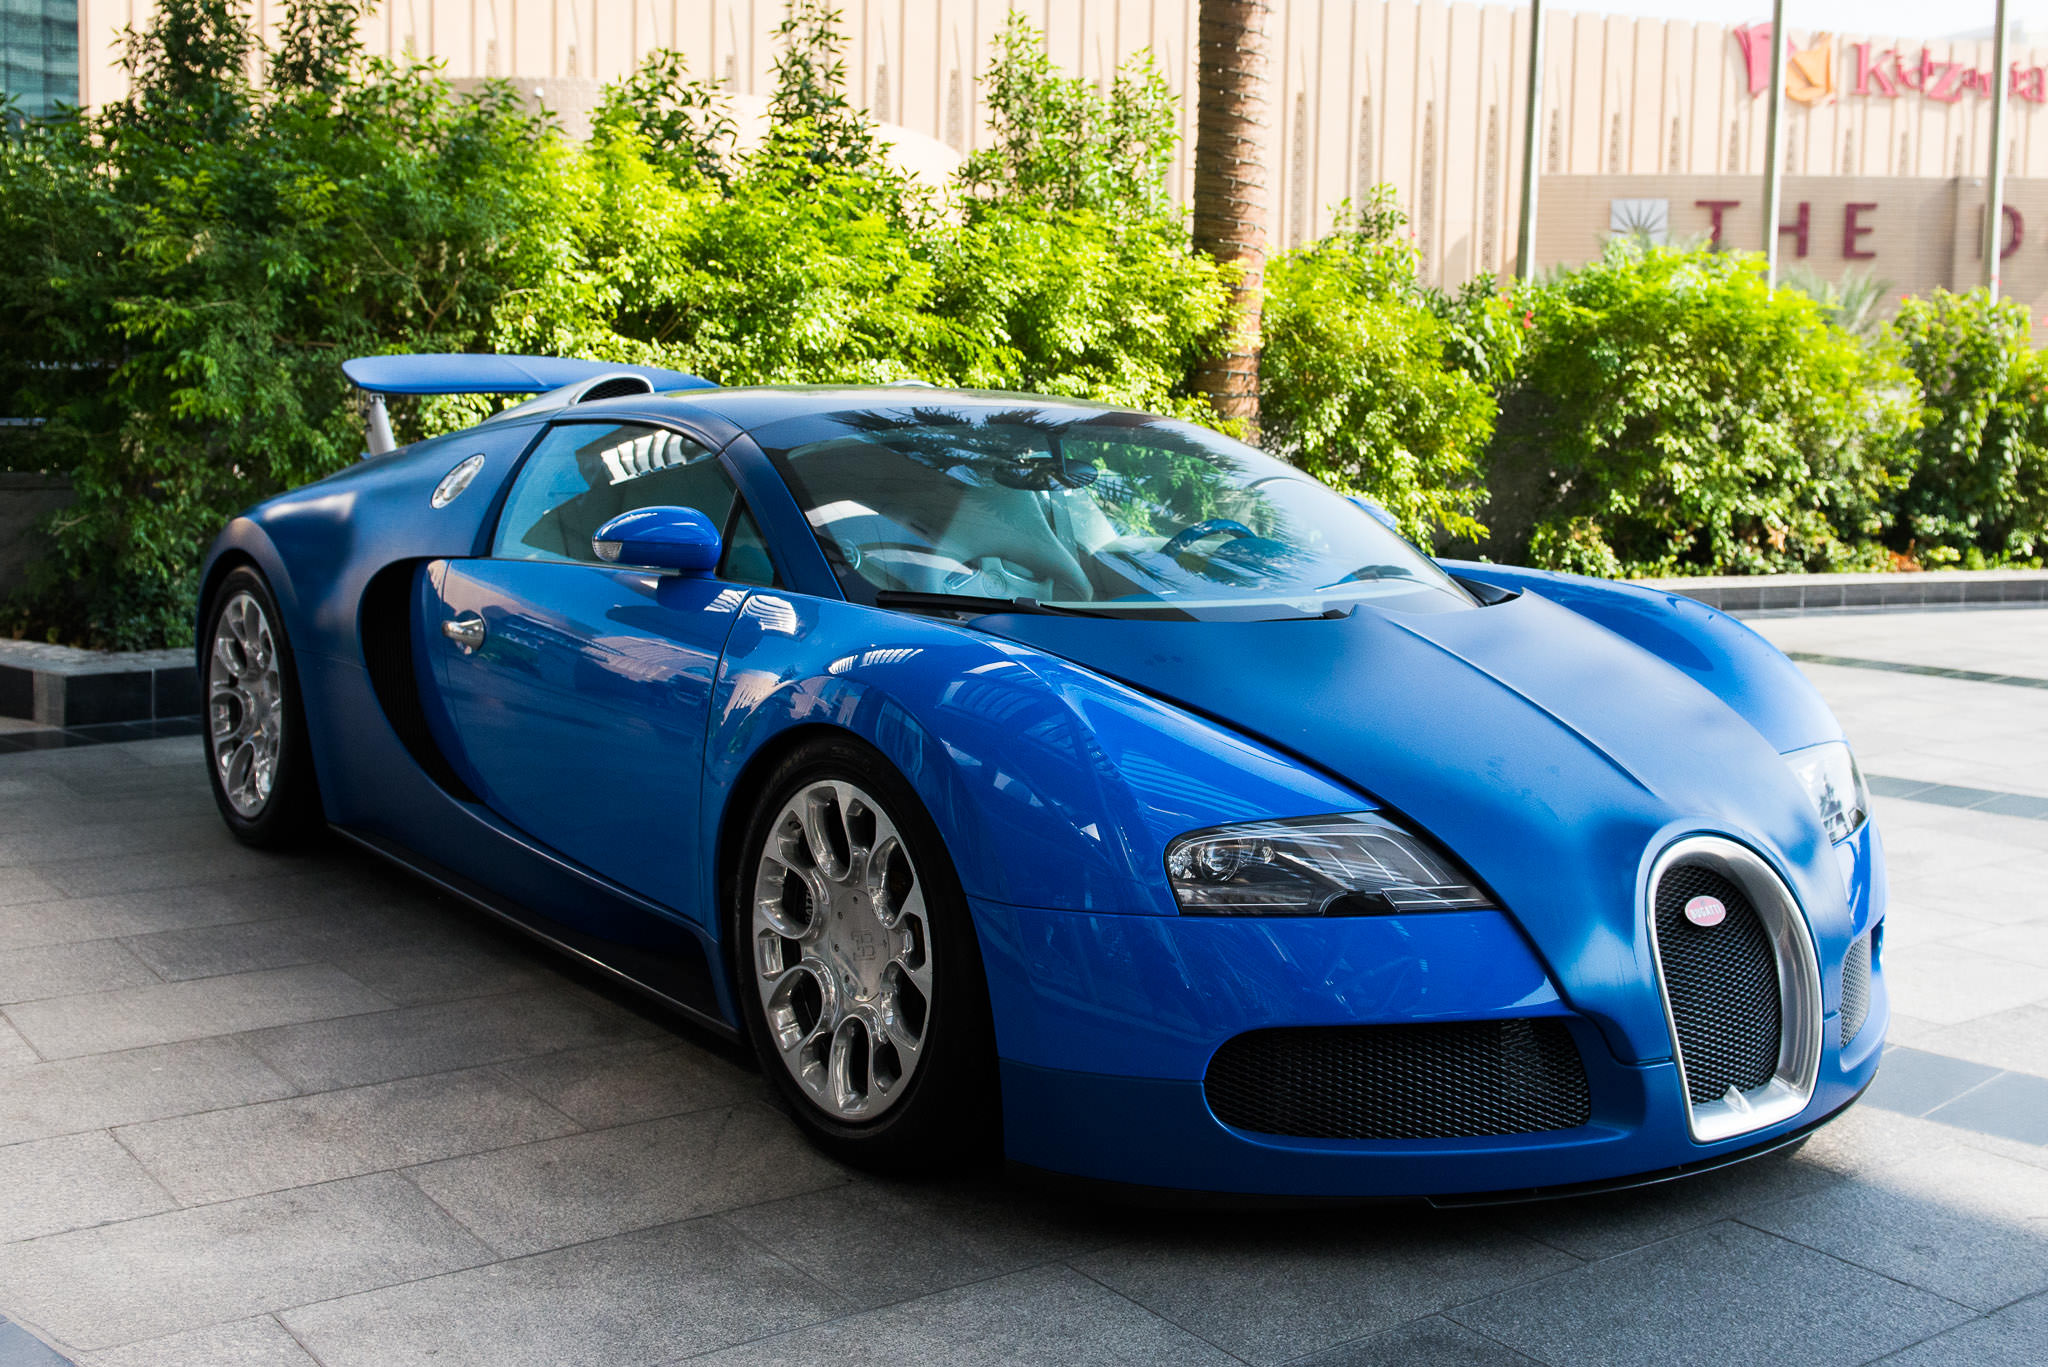 Bugatti Veyron - fastest street-legal car in the world